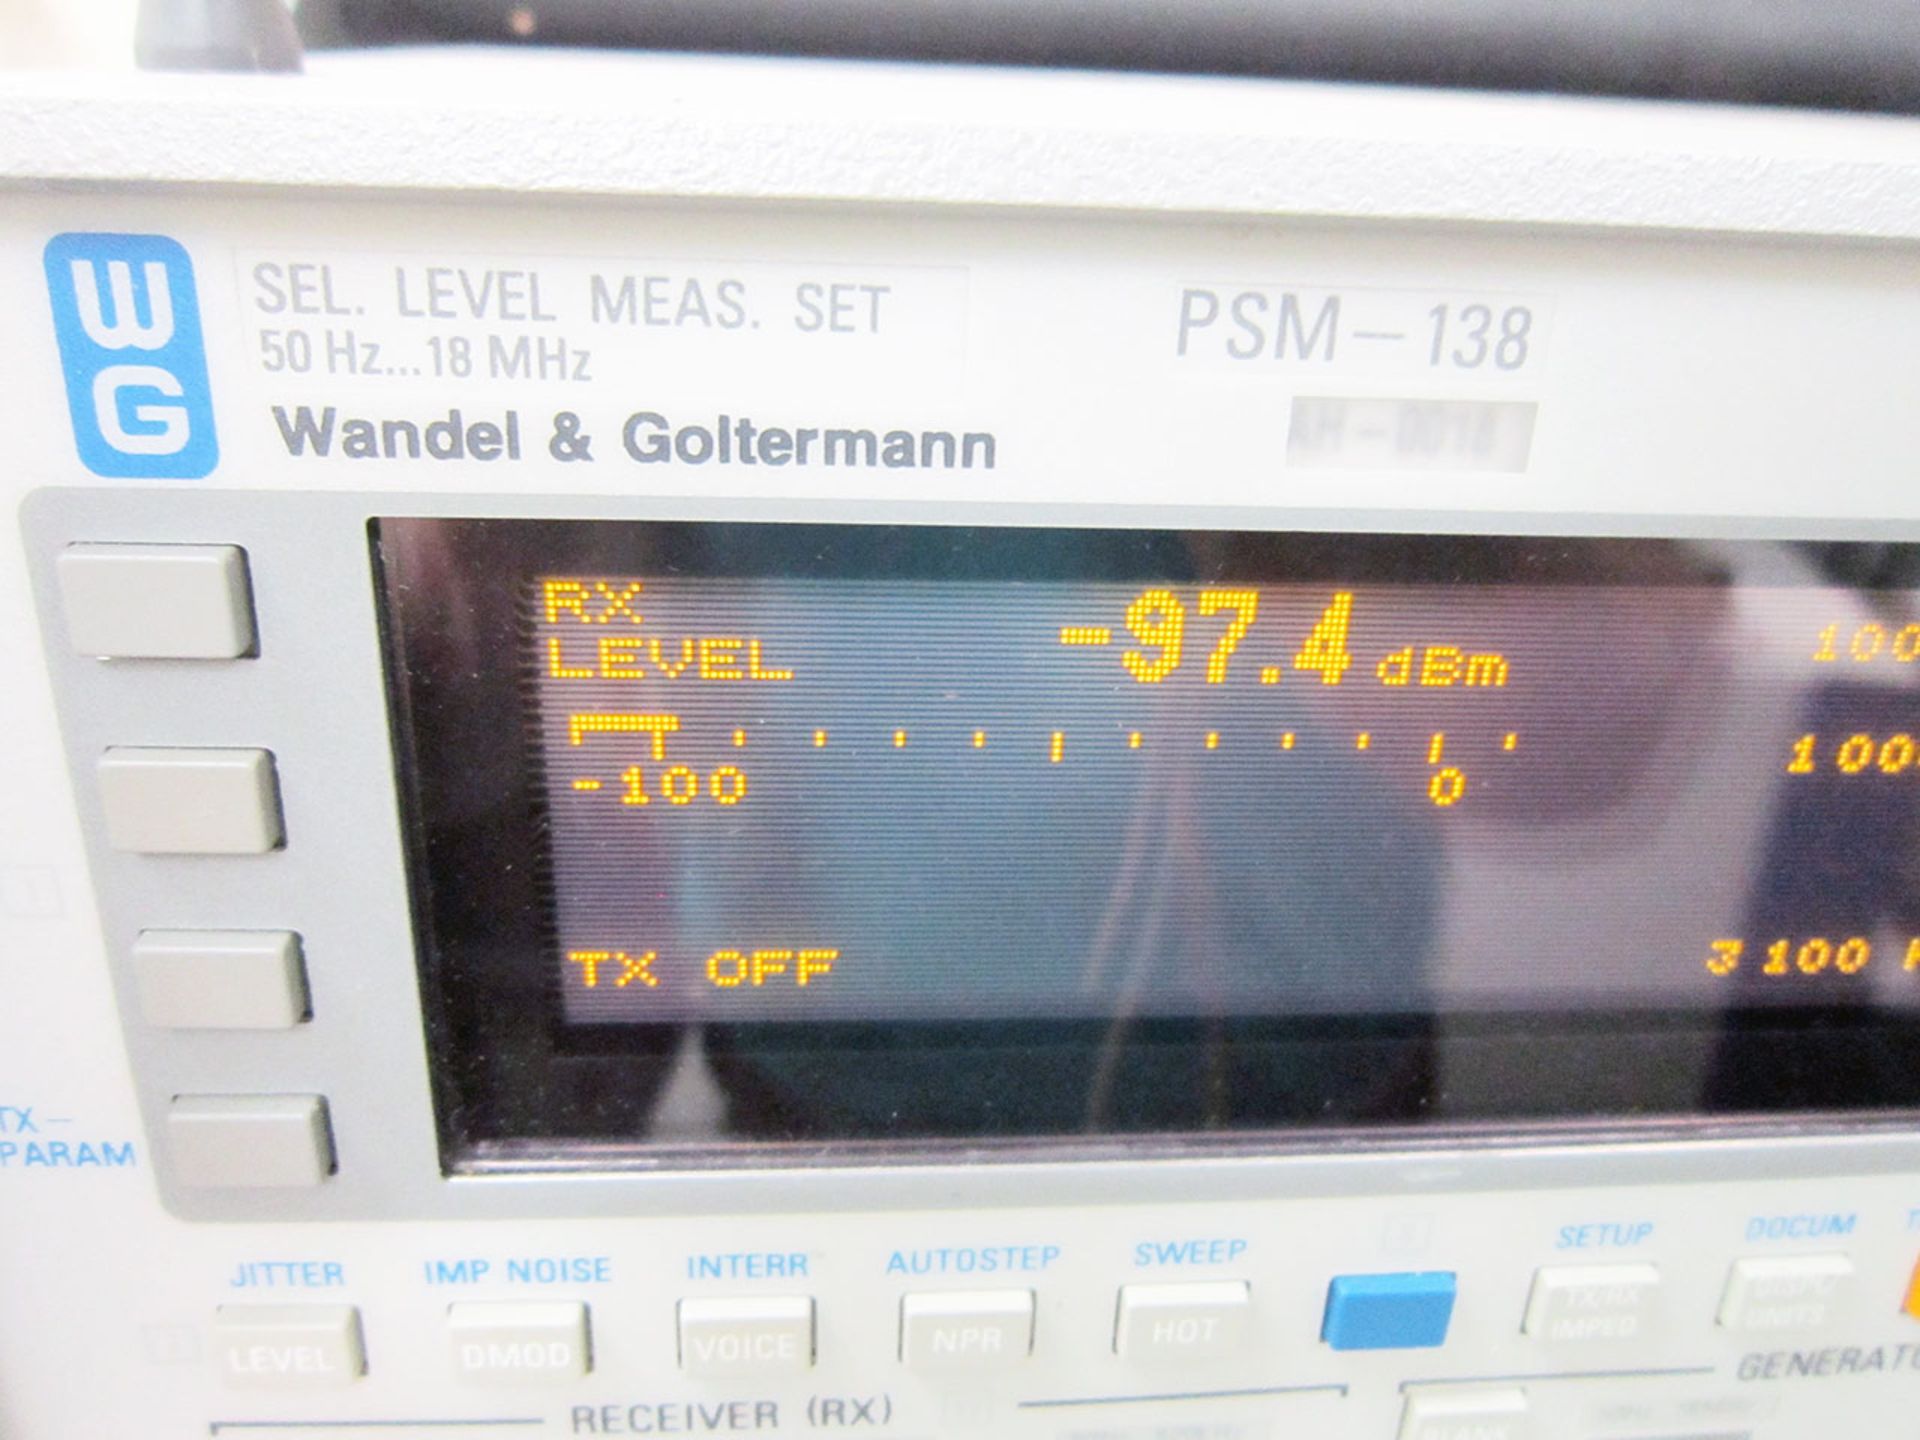 Wandel & Goltermann PSM-138 50 Hz - 18 MHz Selective Level Measurement Set - Image 2 of 3